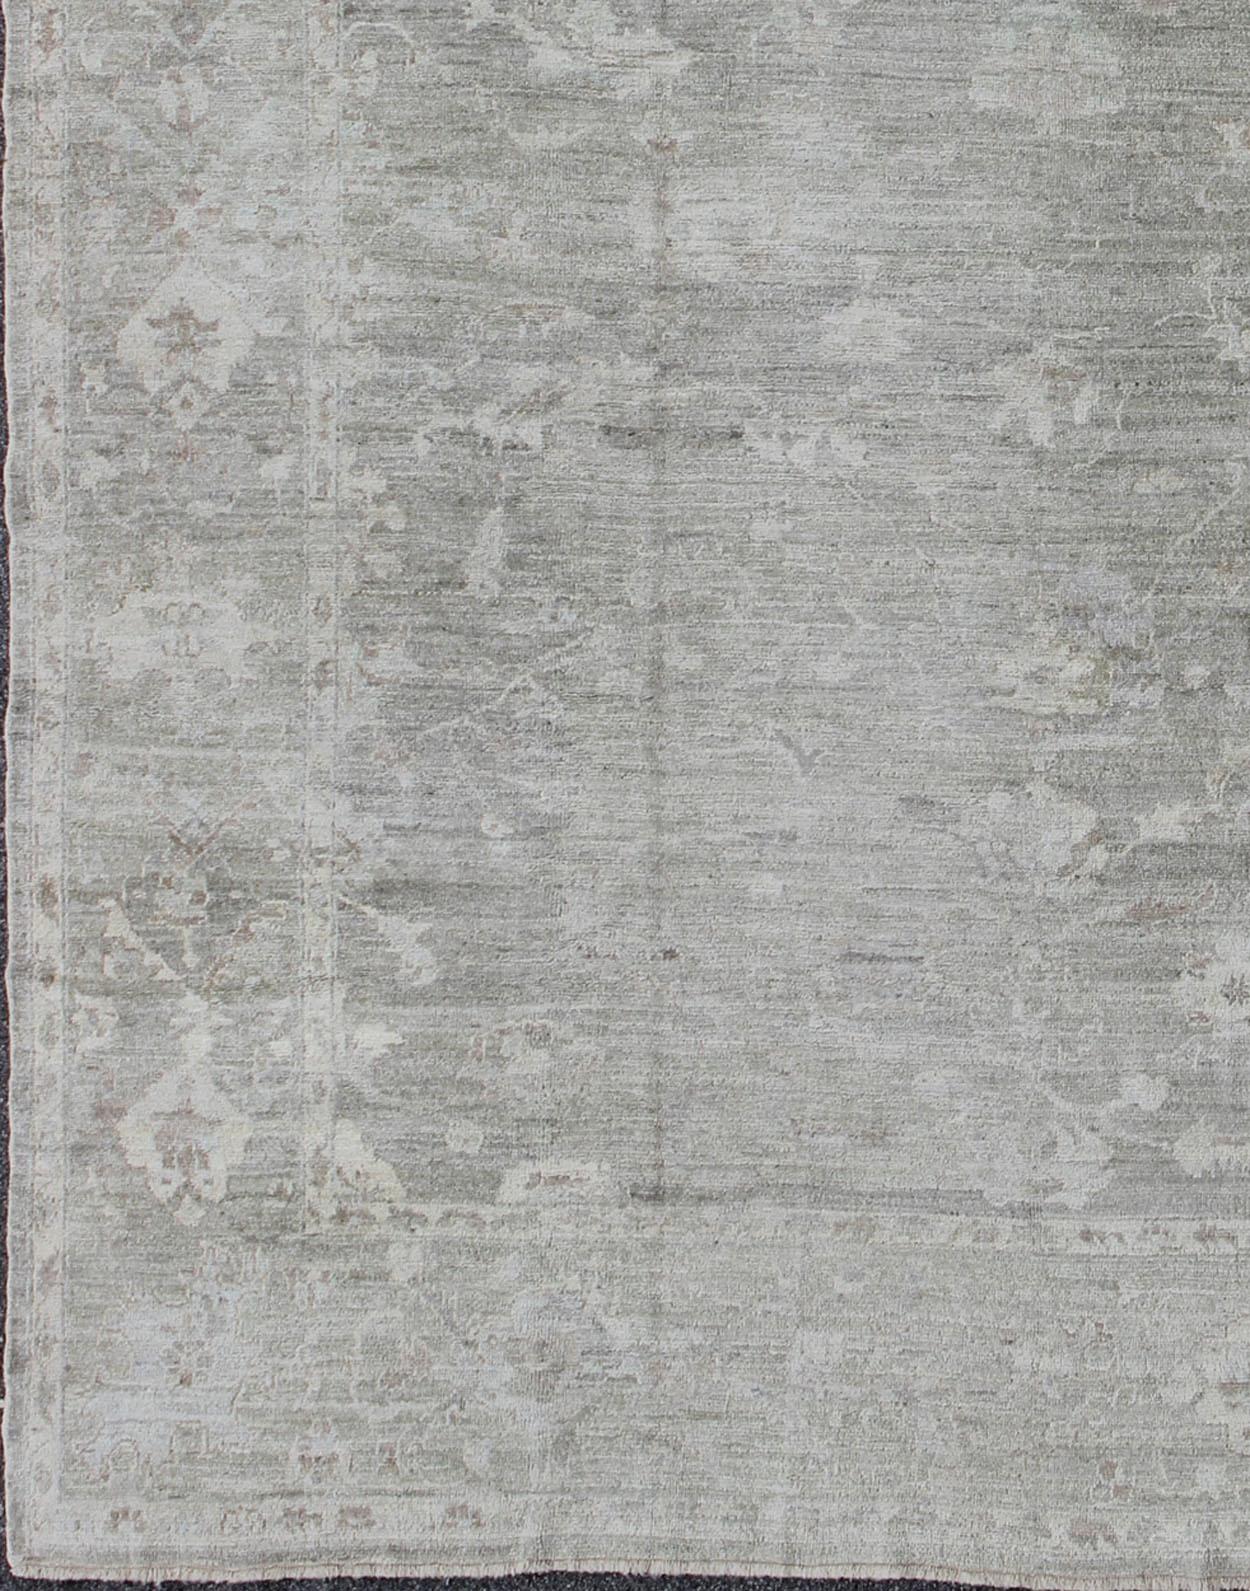 Grand tapis turc Angora Oushak avec design floral All-Over Vining par Keivan Woven Arts. tapis AN-126255, pays d'origine / type : Turquie / Oushak. antique Ushak, Angora Oushak. 

Mesures : 12'1 x 14'7 

Le design de ce magnifique tapis Oushak,